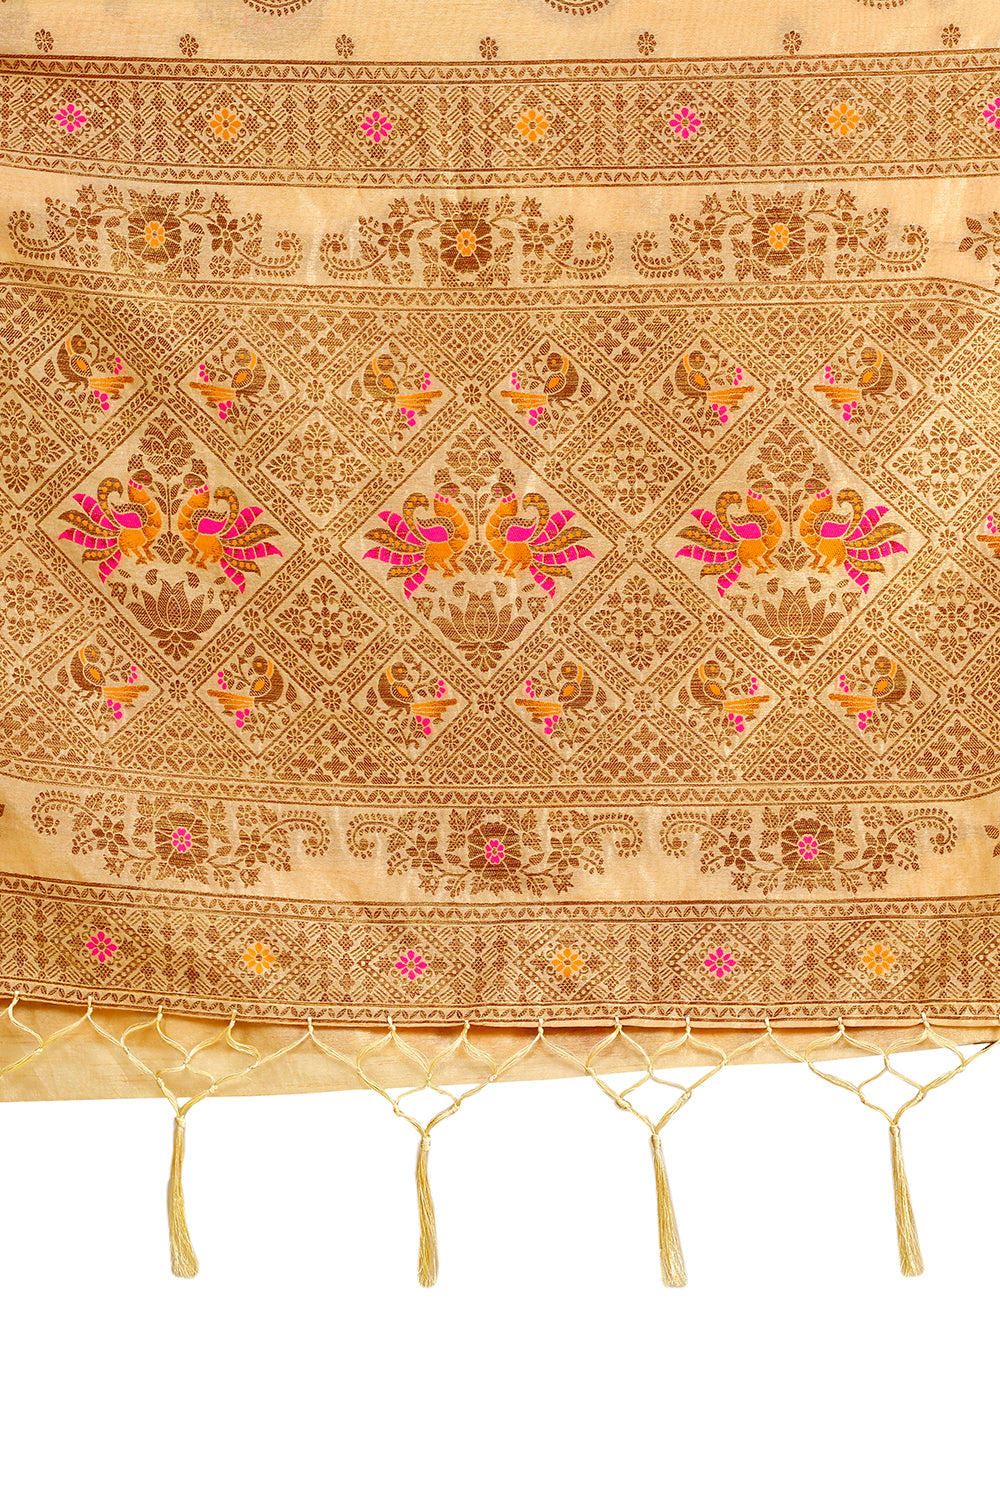 Attractive silk saree for wedding buy now